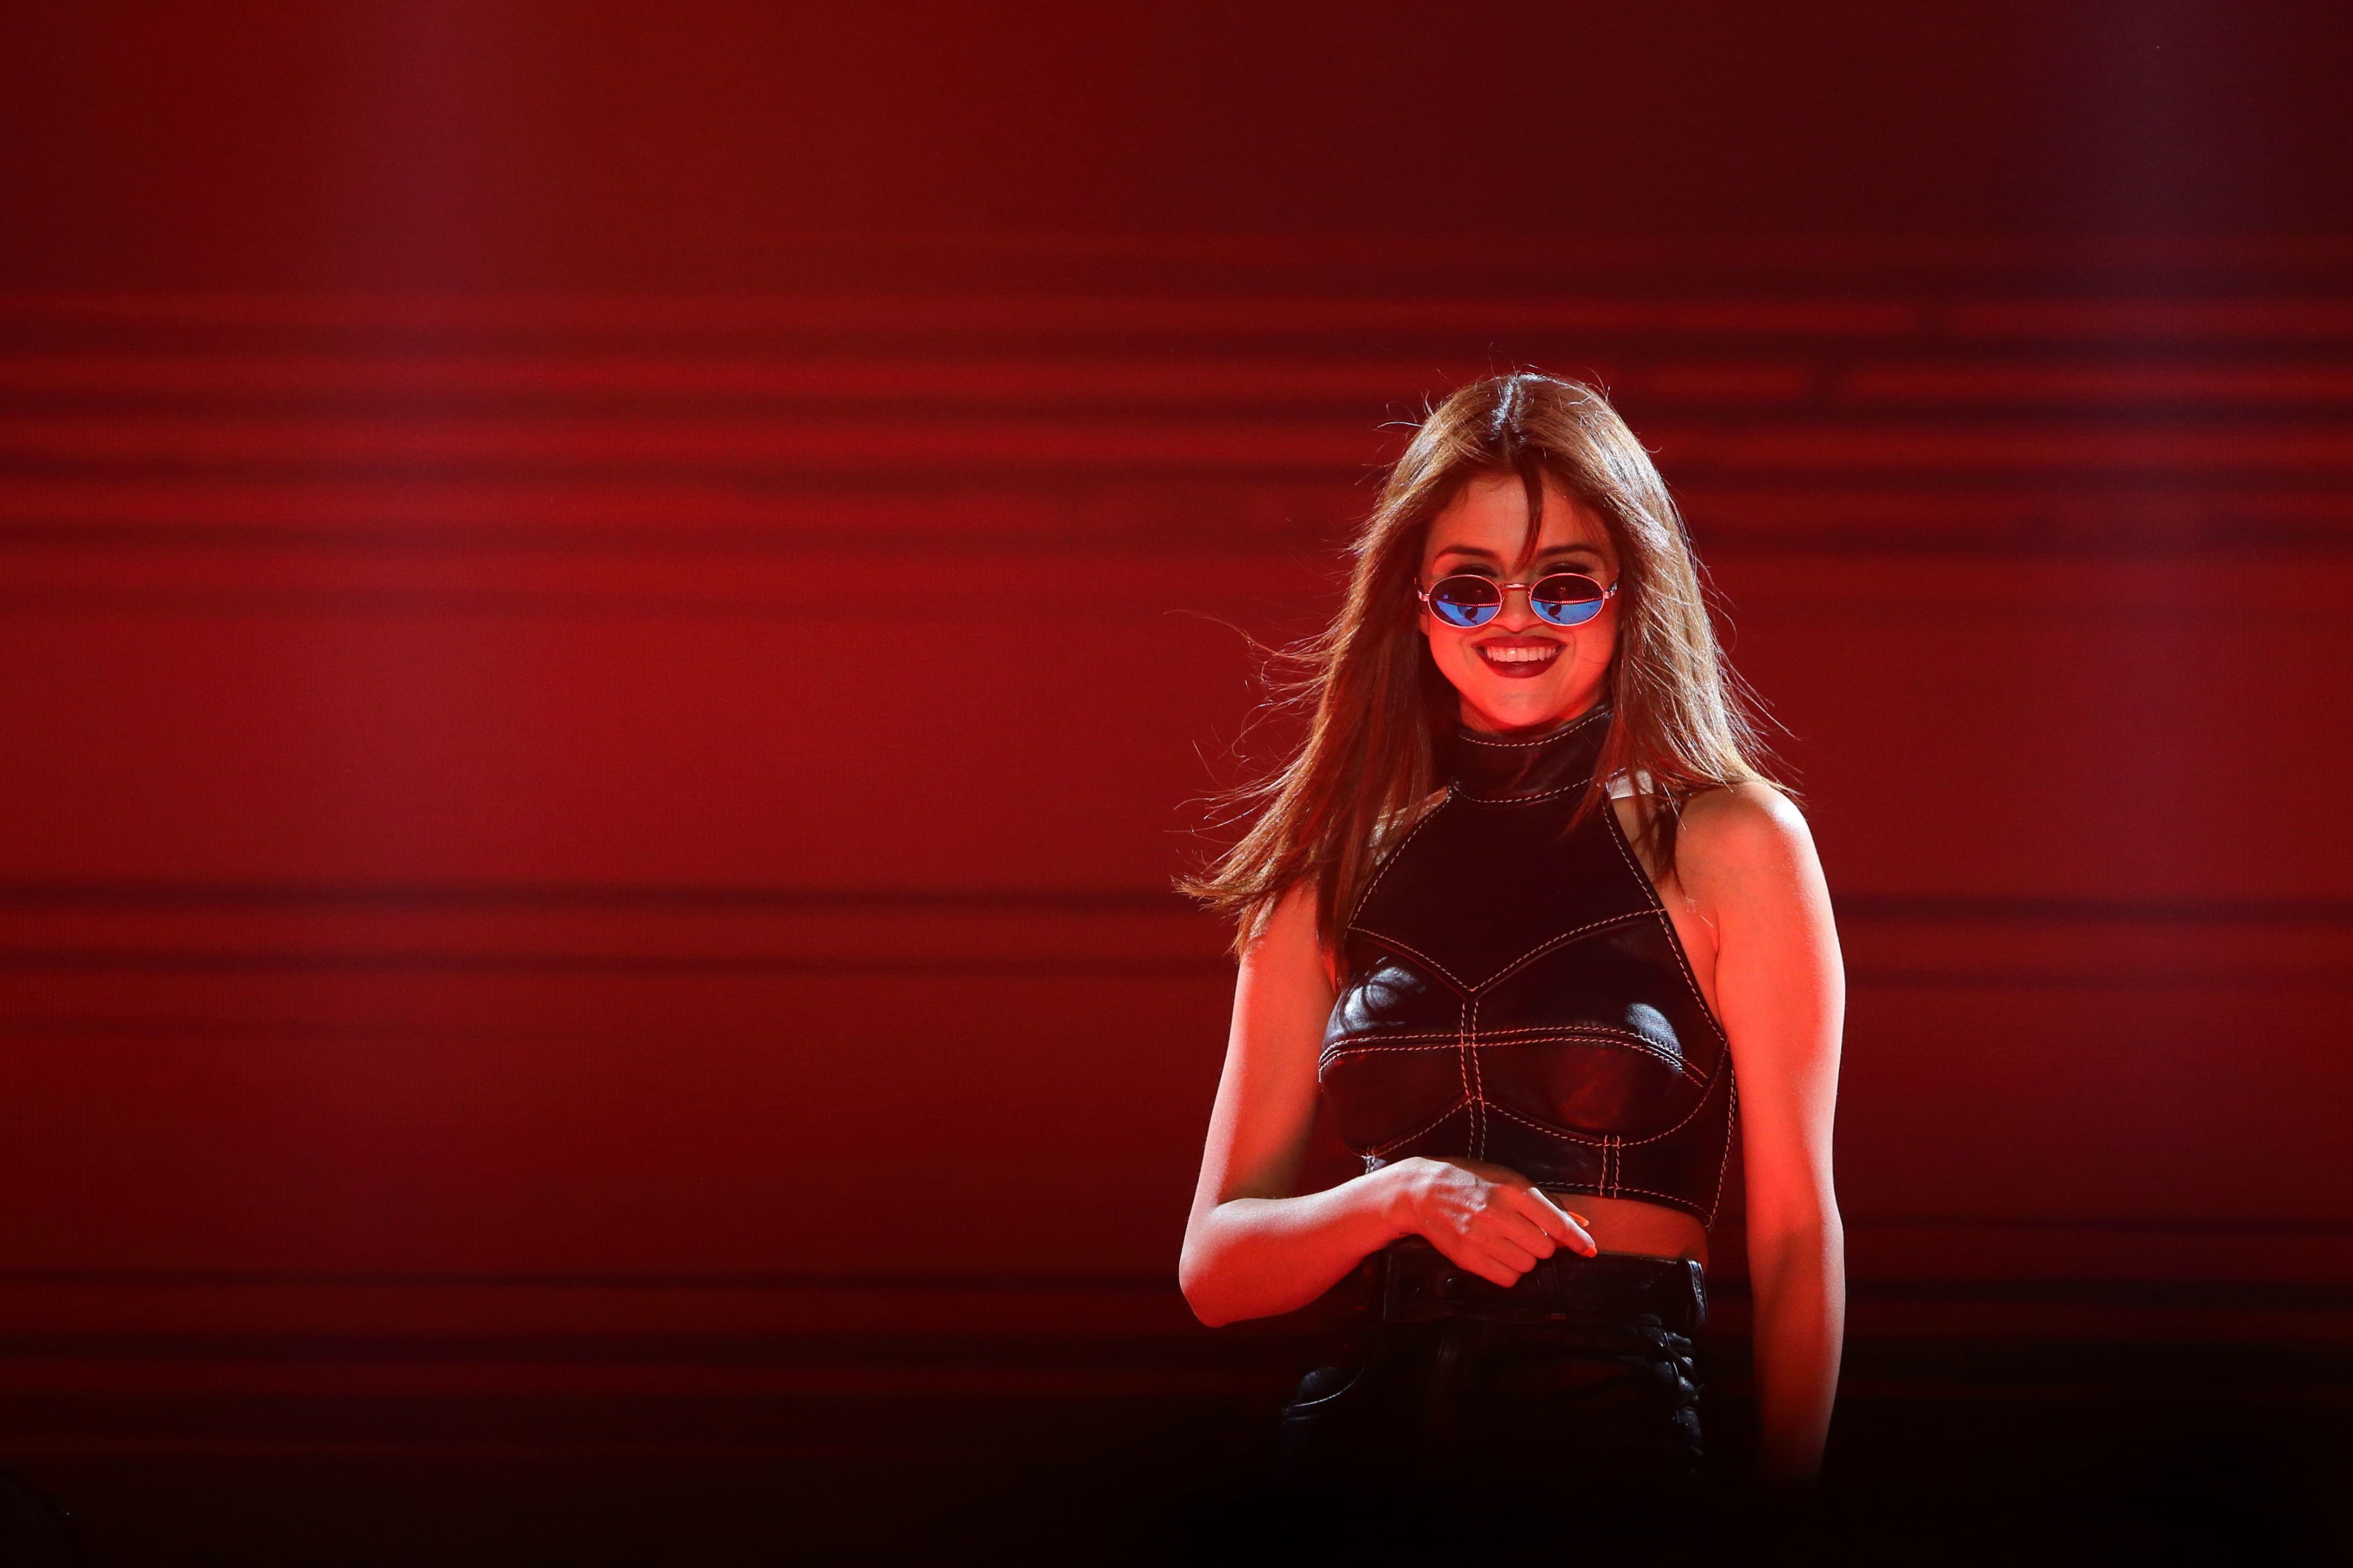 VMAs 2023 Nominee Rema on working with Selena Gomez | THR Video